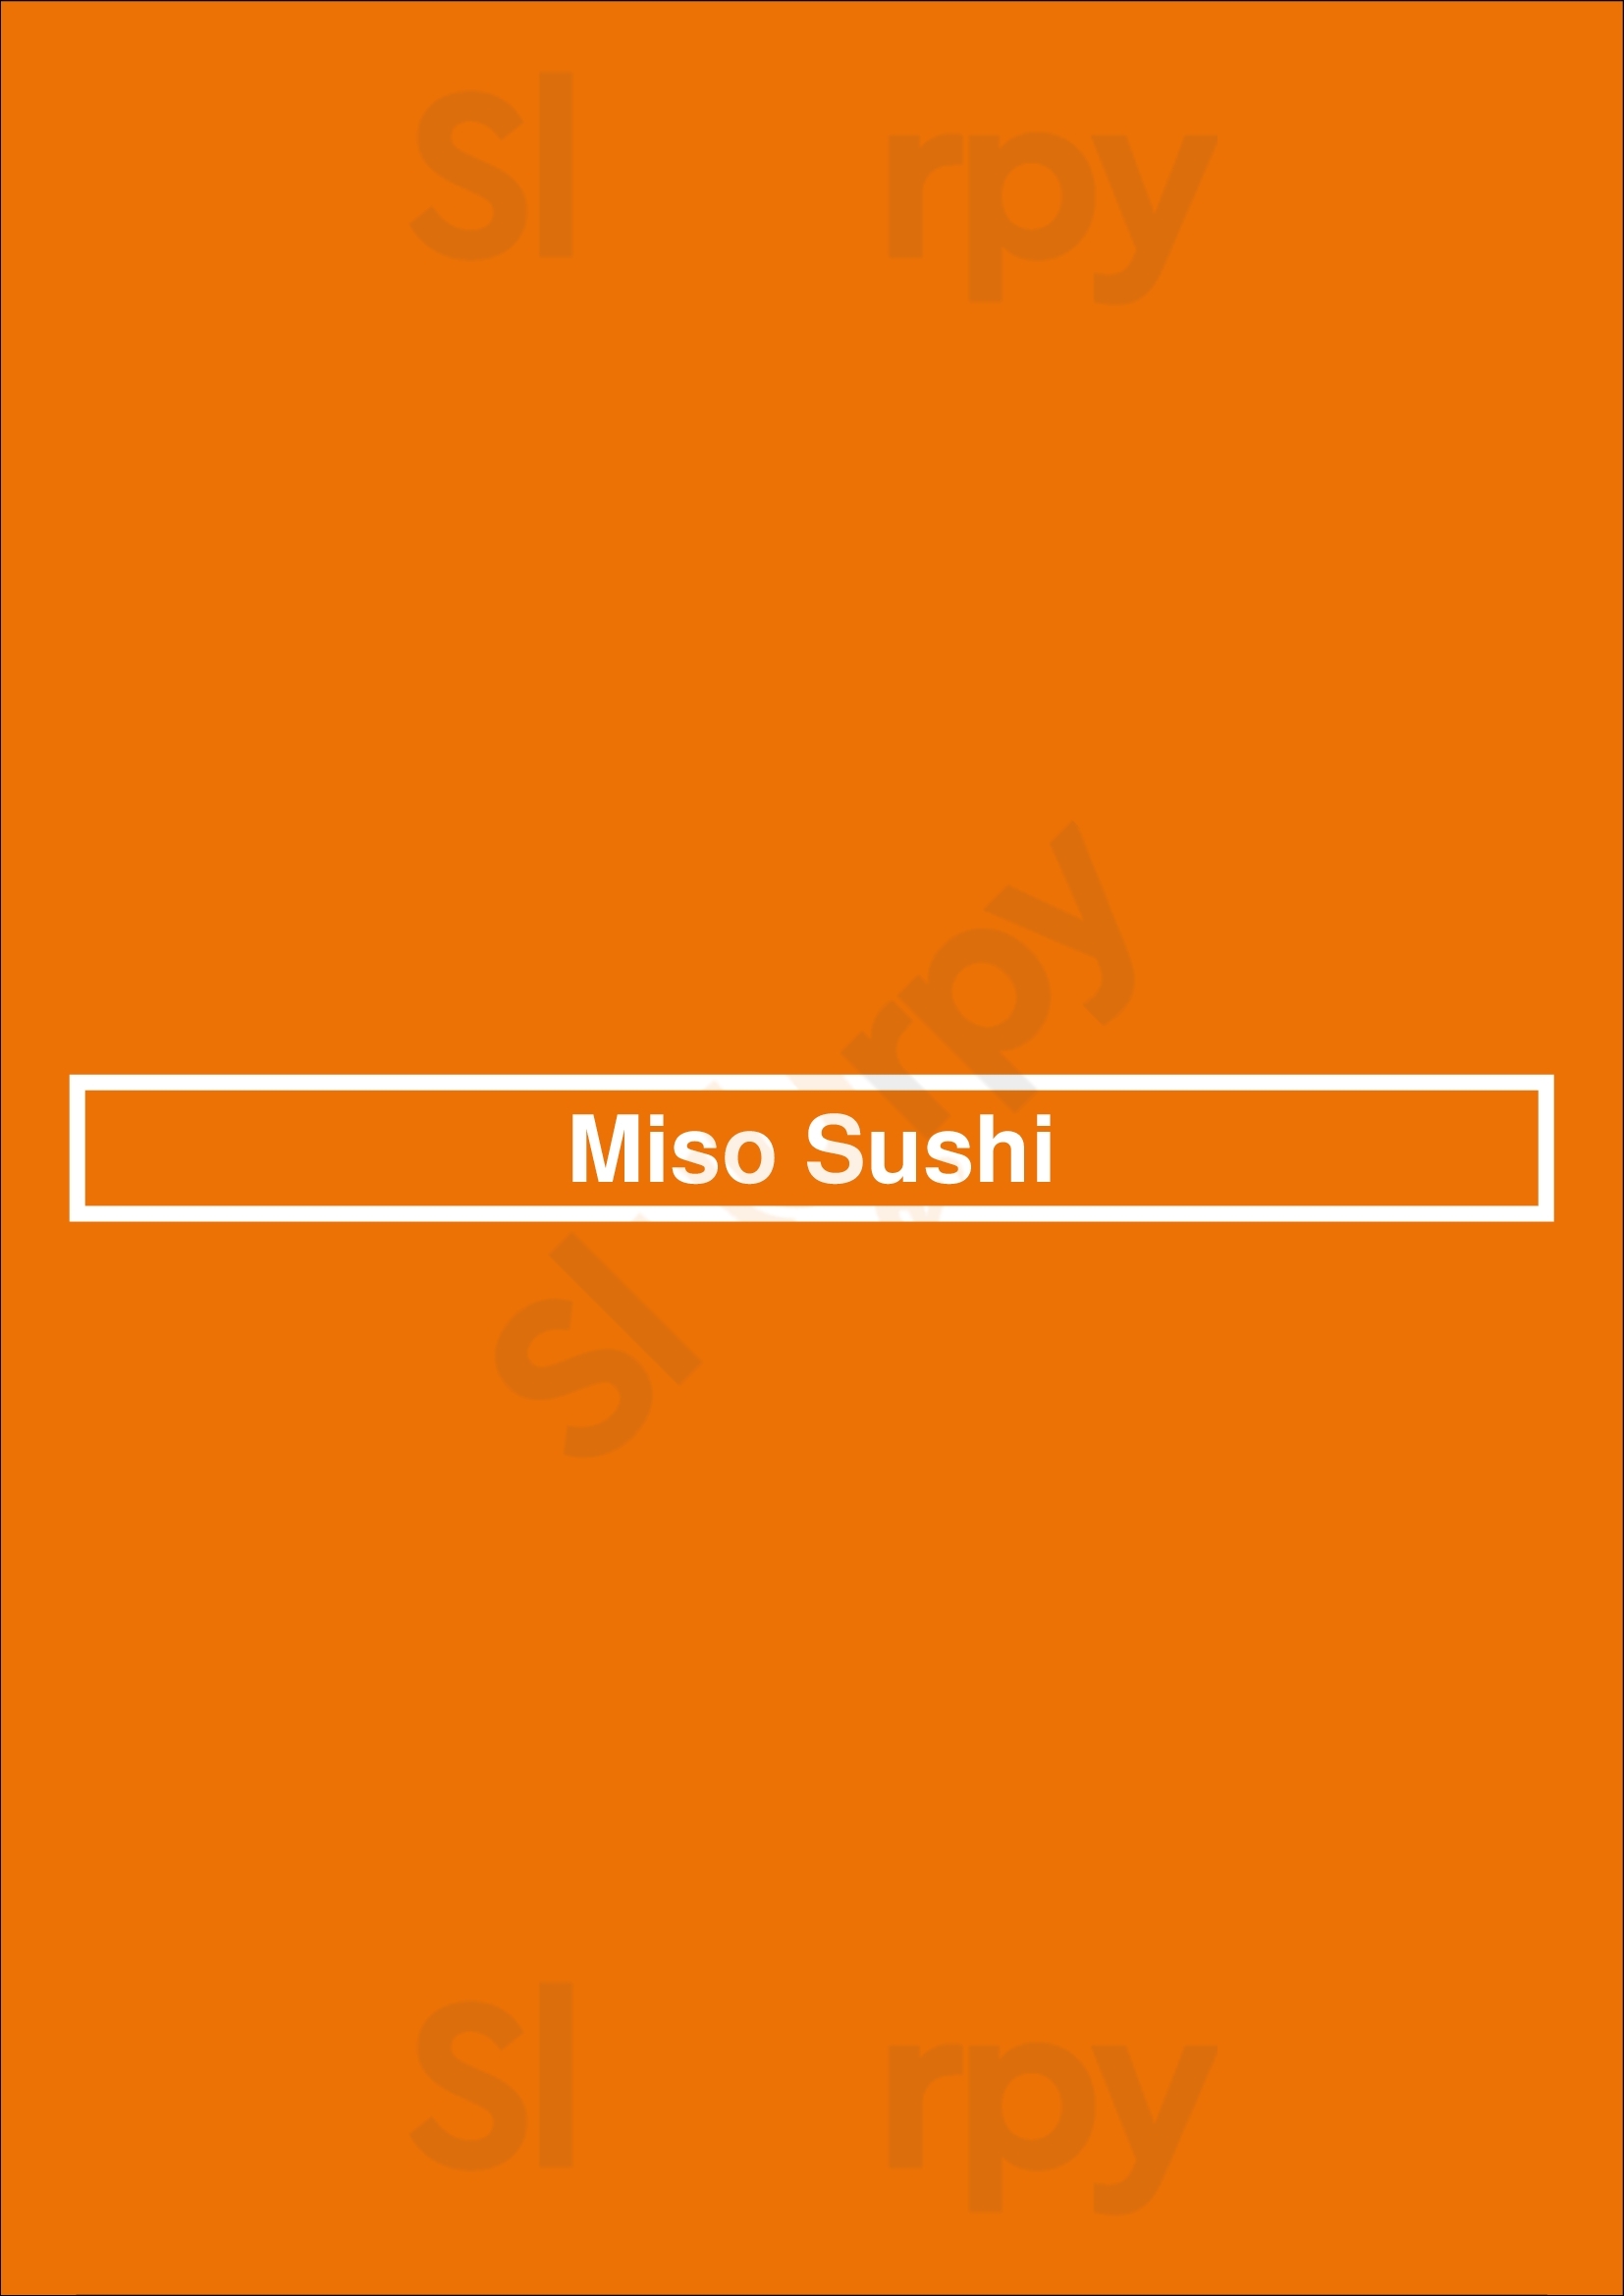 Miso Sushi London Menu - 1